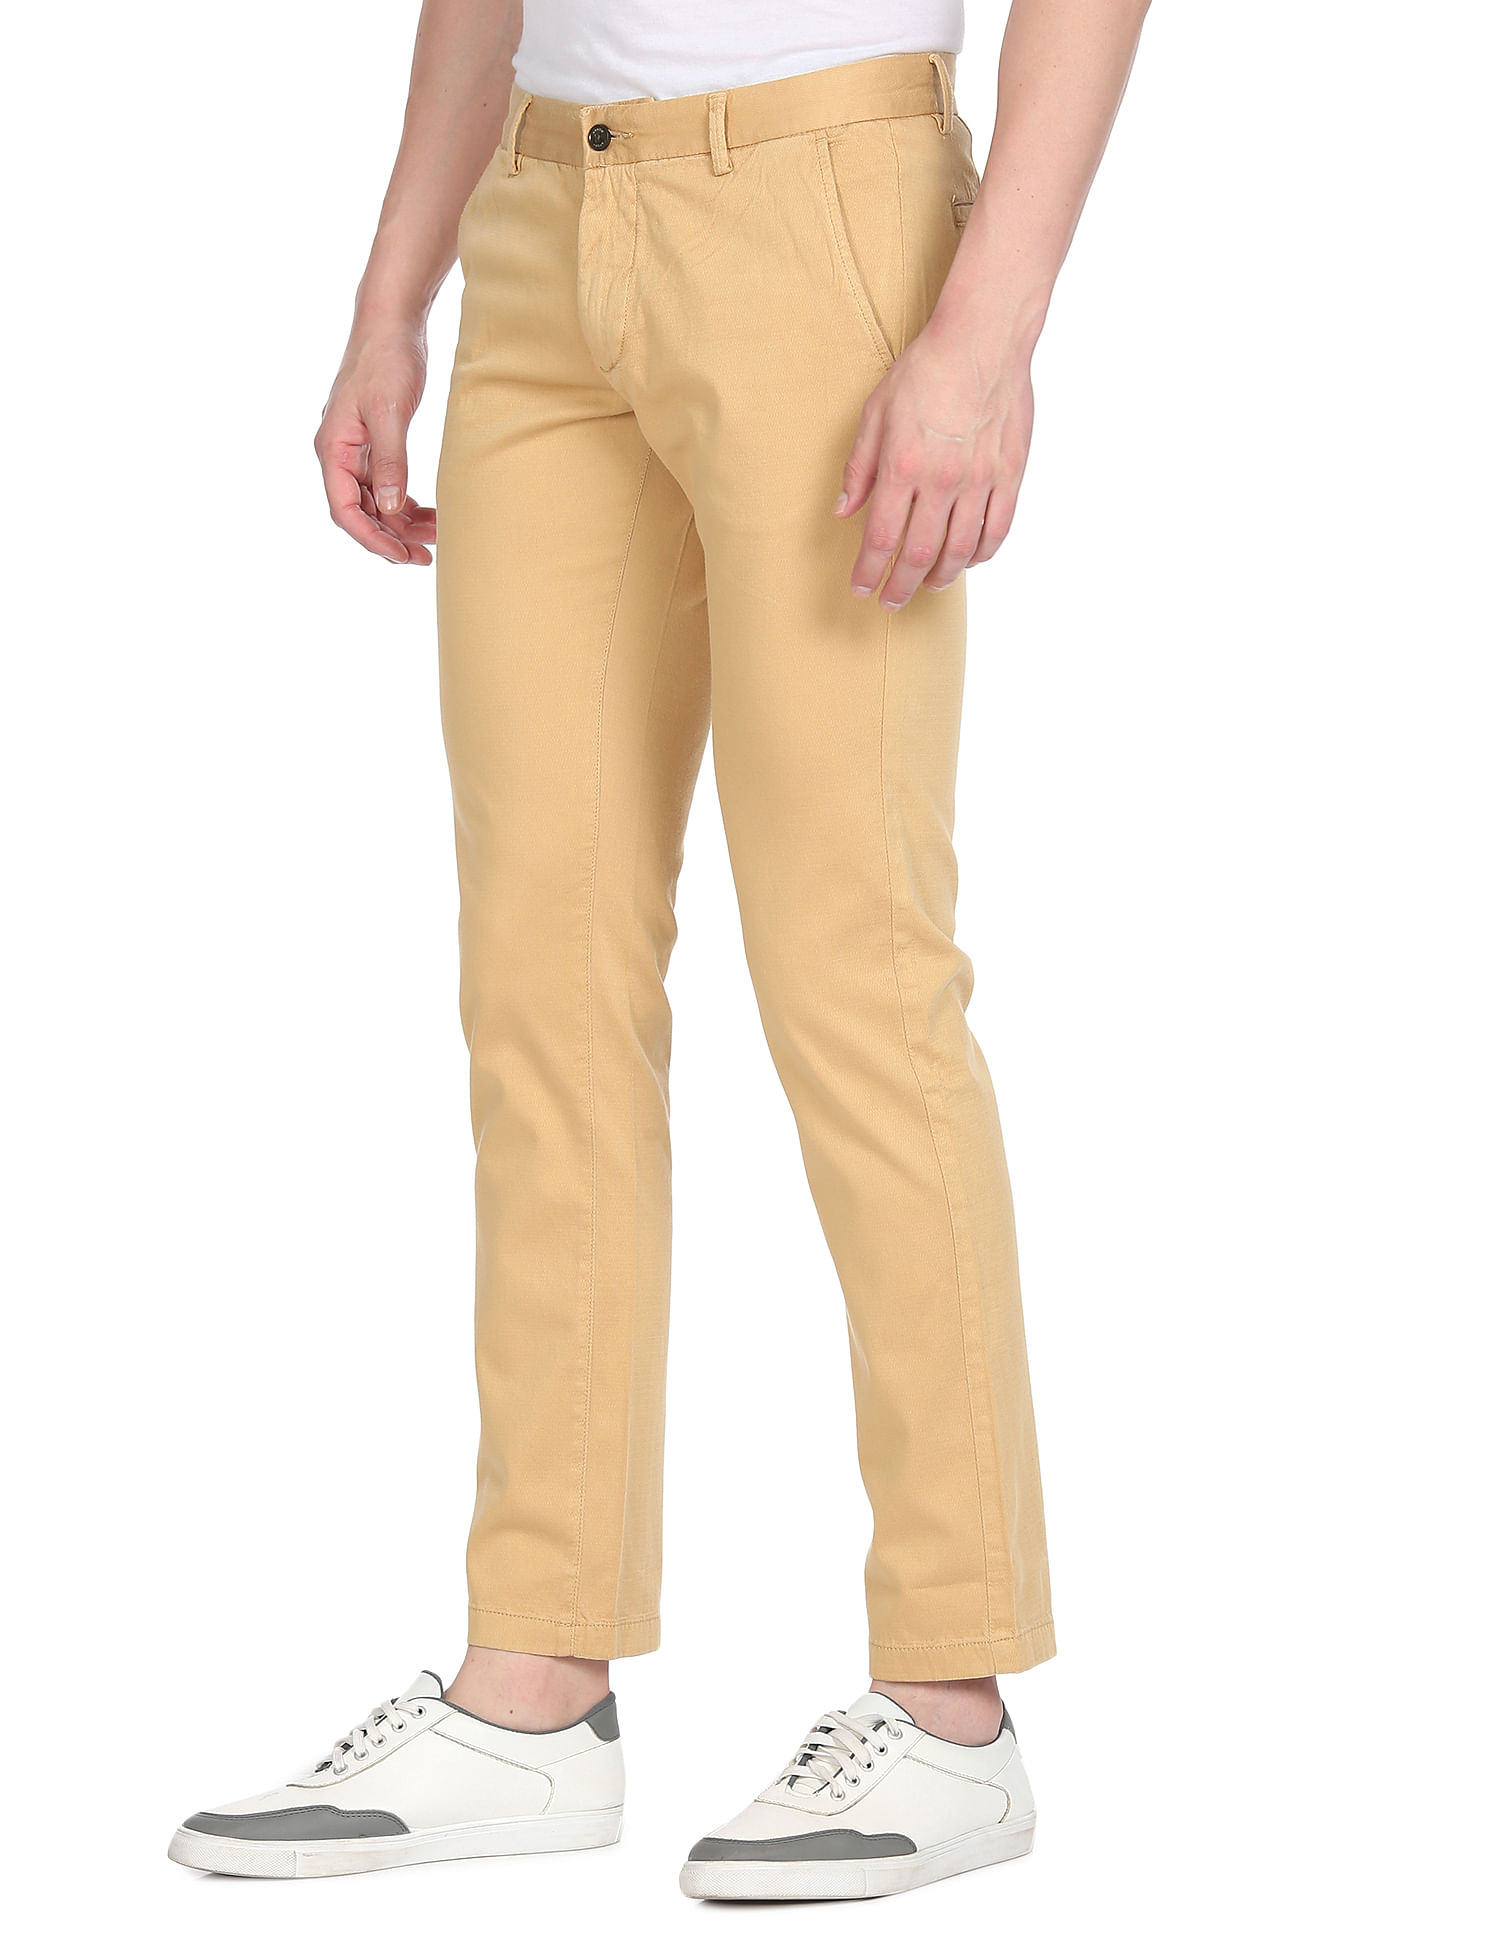 Rox Rite High Waist Casual Trousers|Fimkastore.com: Online Shopping  Wholesale Womens Clothing